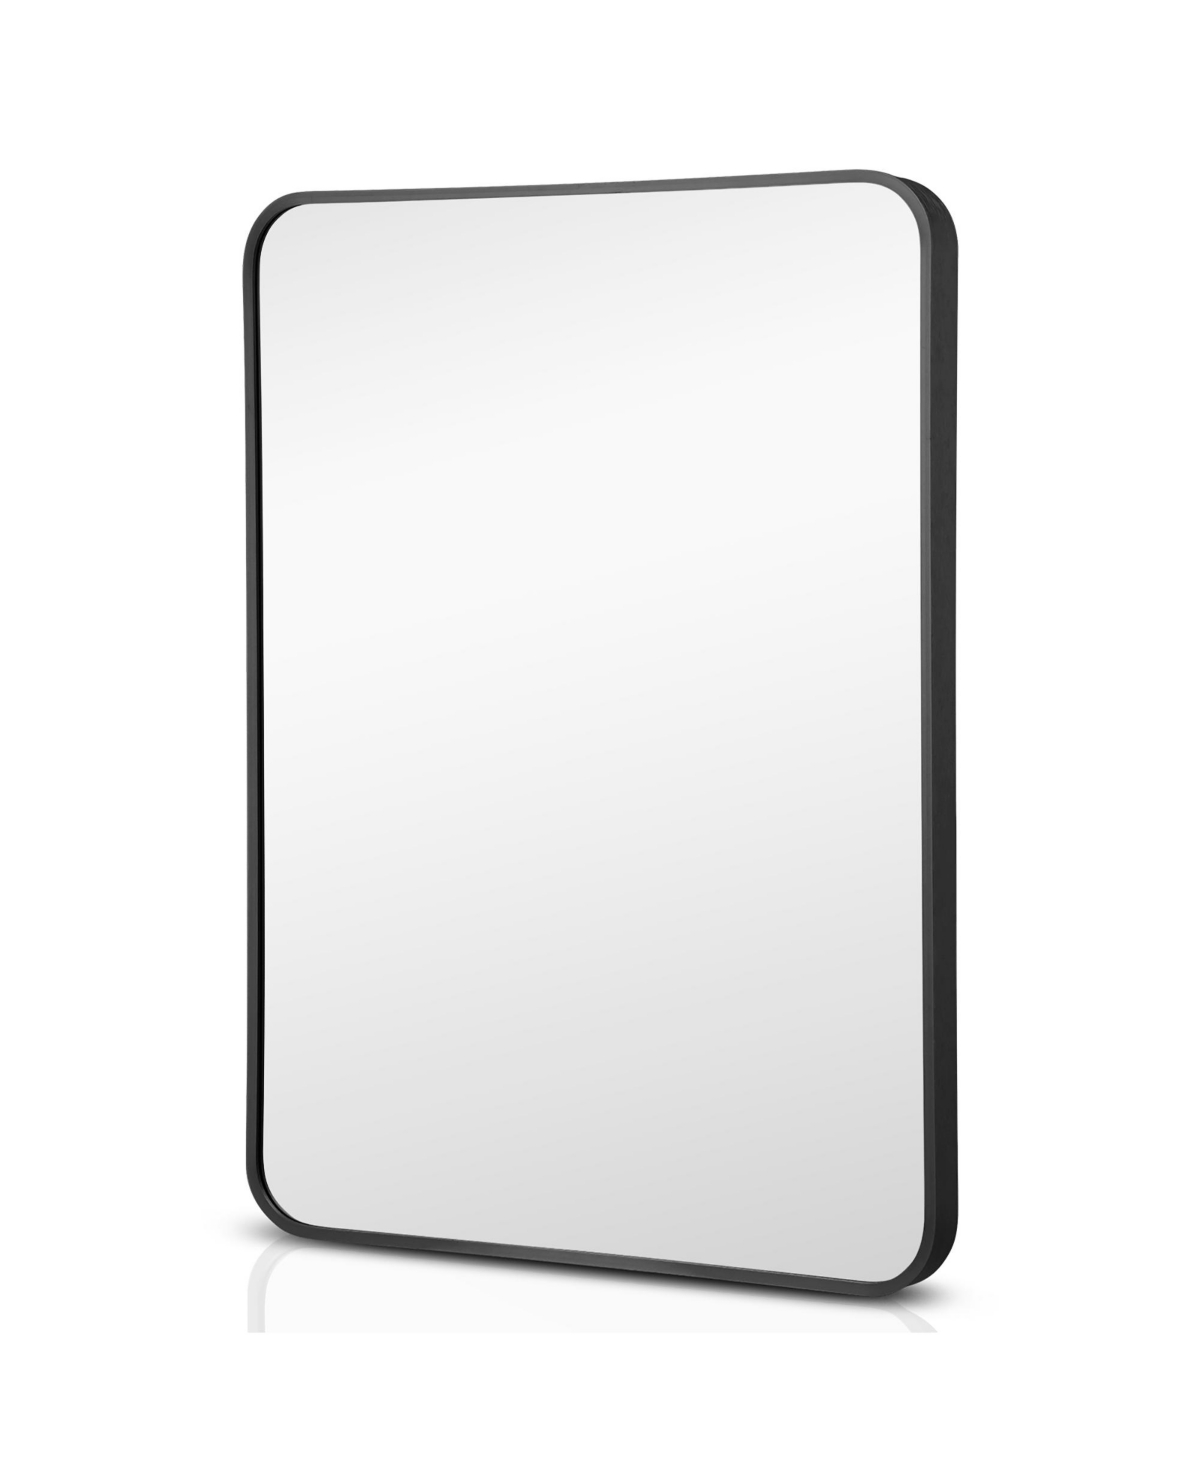 22''x 30''Bathroom Wall Mounted Mirror Aluminum Alloy Frame Decor - Gold